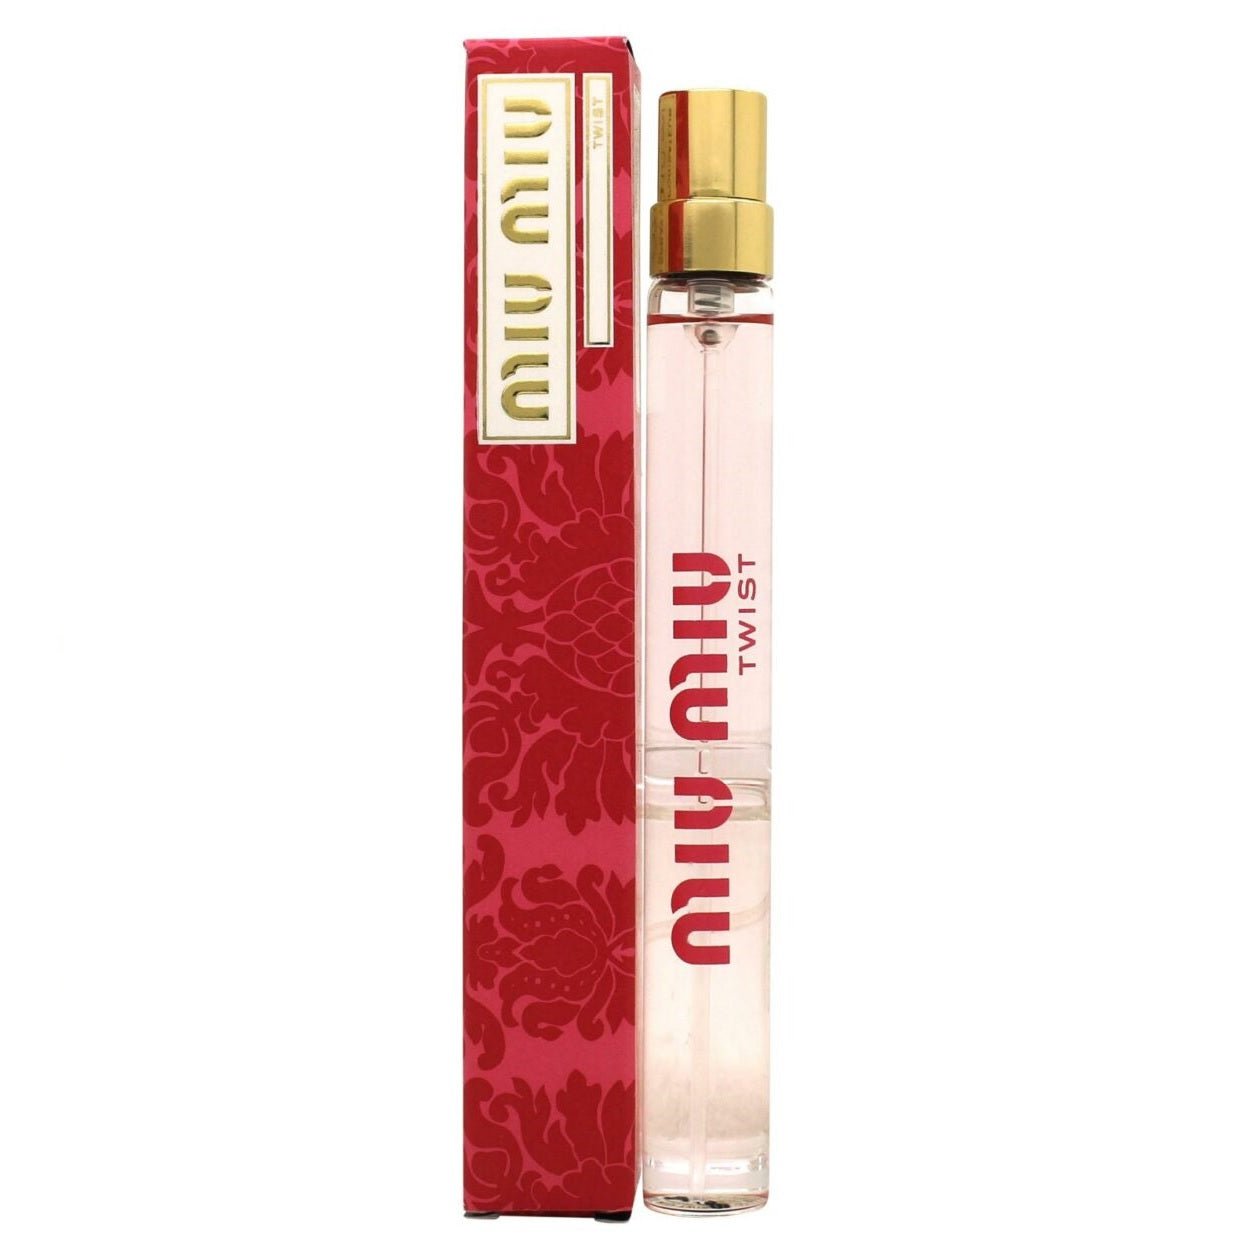 Miu Miu Twist Eau De Parfum Spray 10ml - Feel Gorgeous